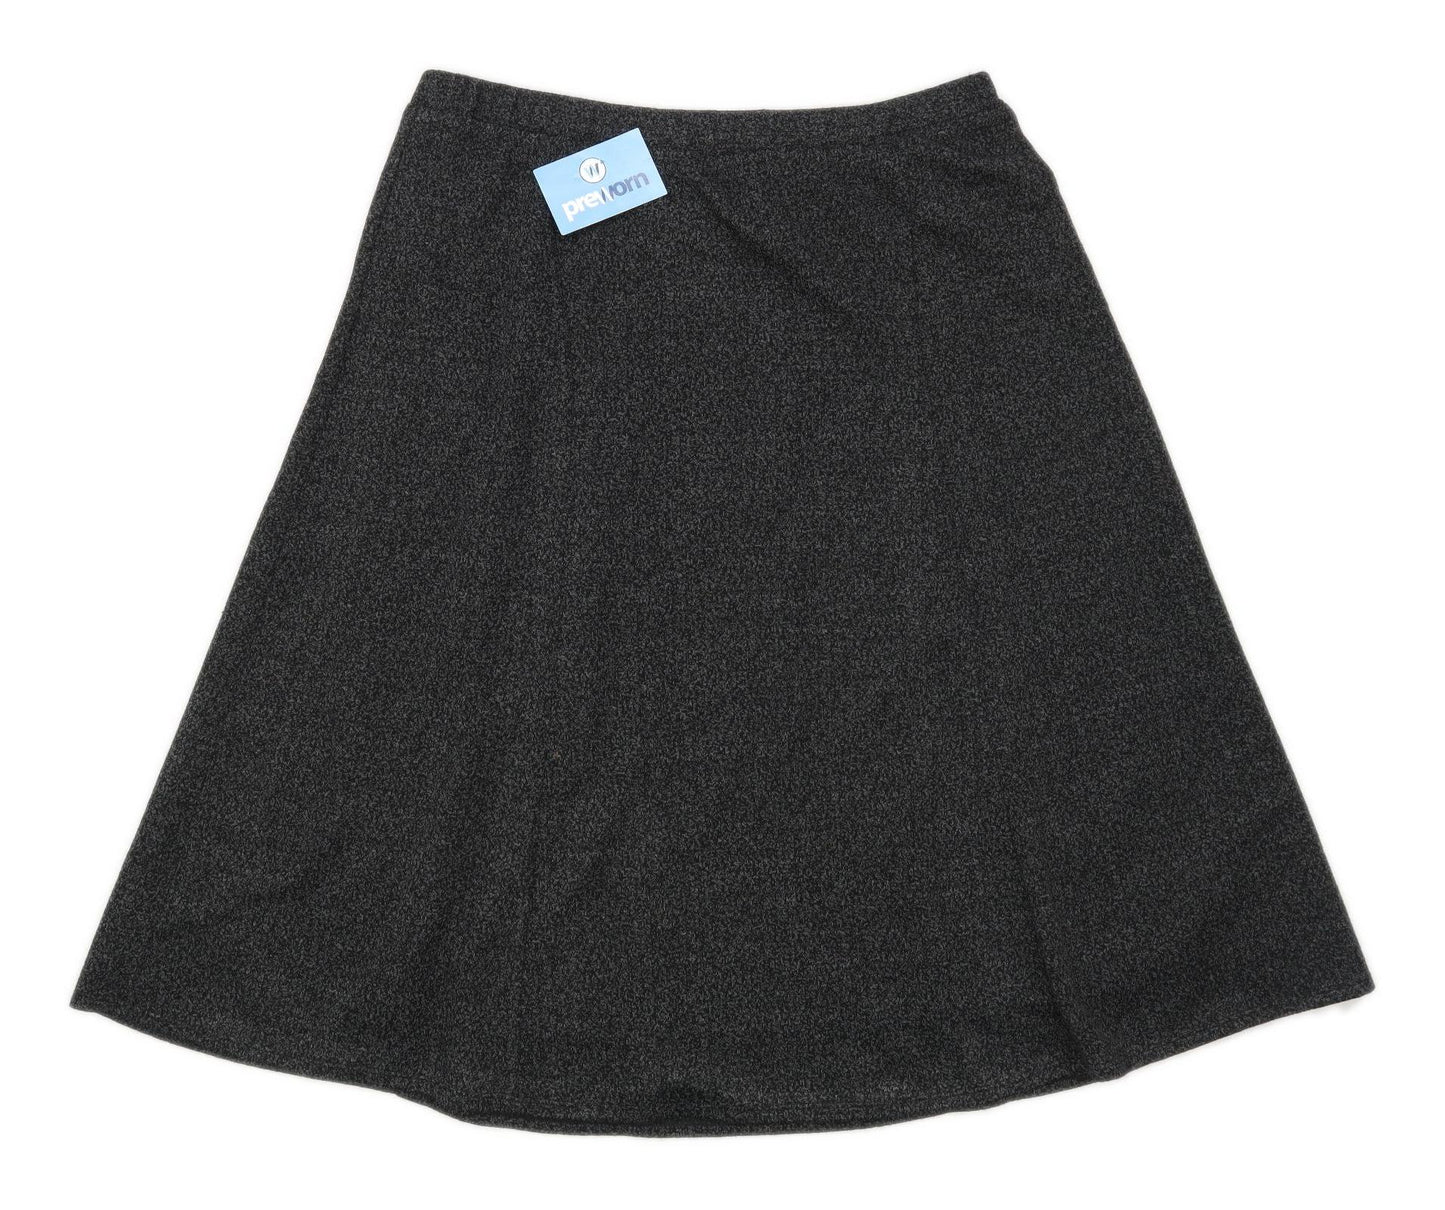 Debenhams Womens Size 18 Grey Flare Skirt (Regular)